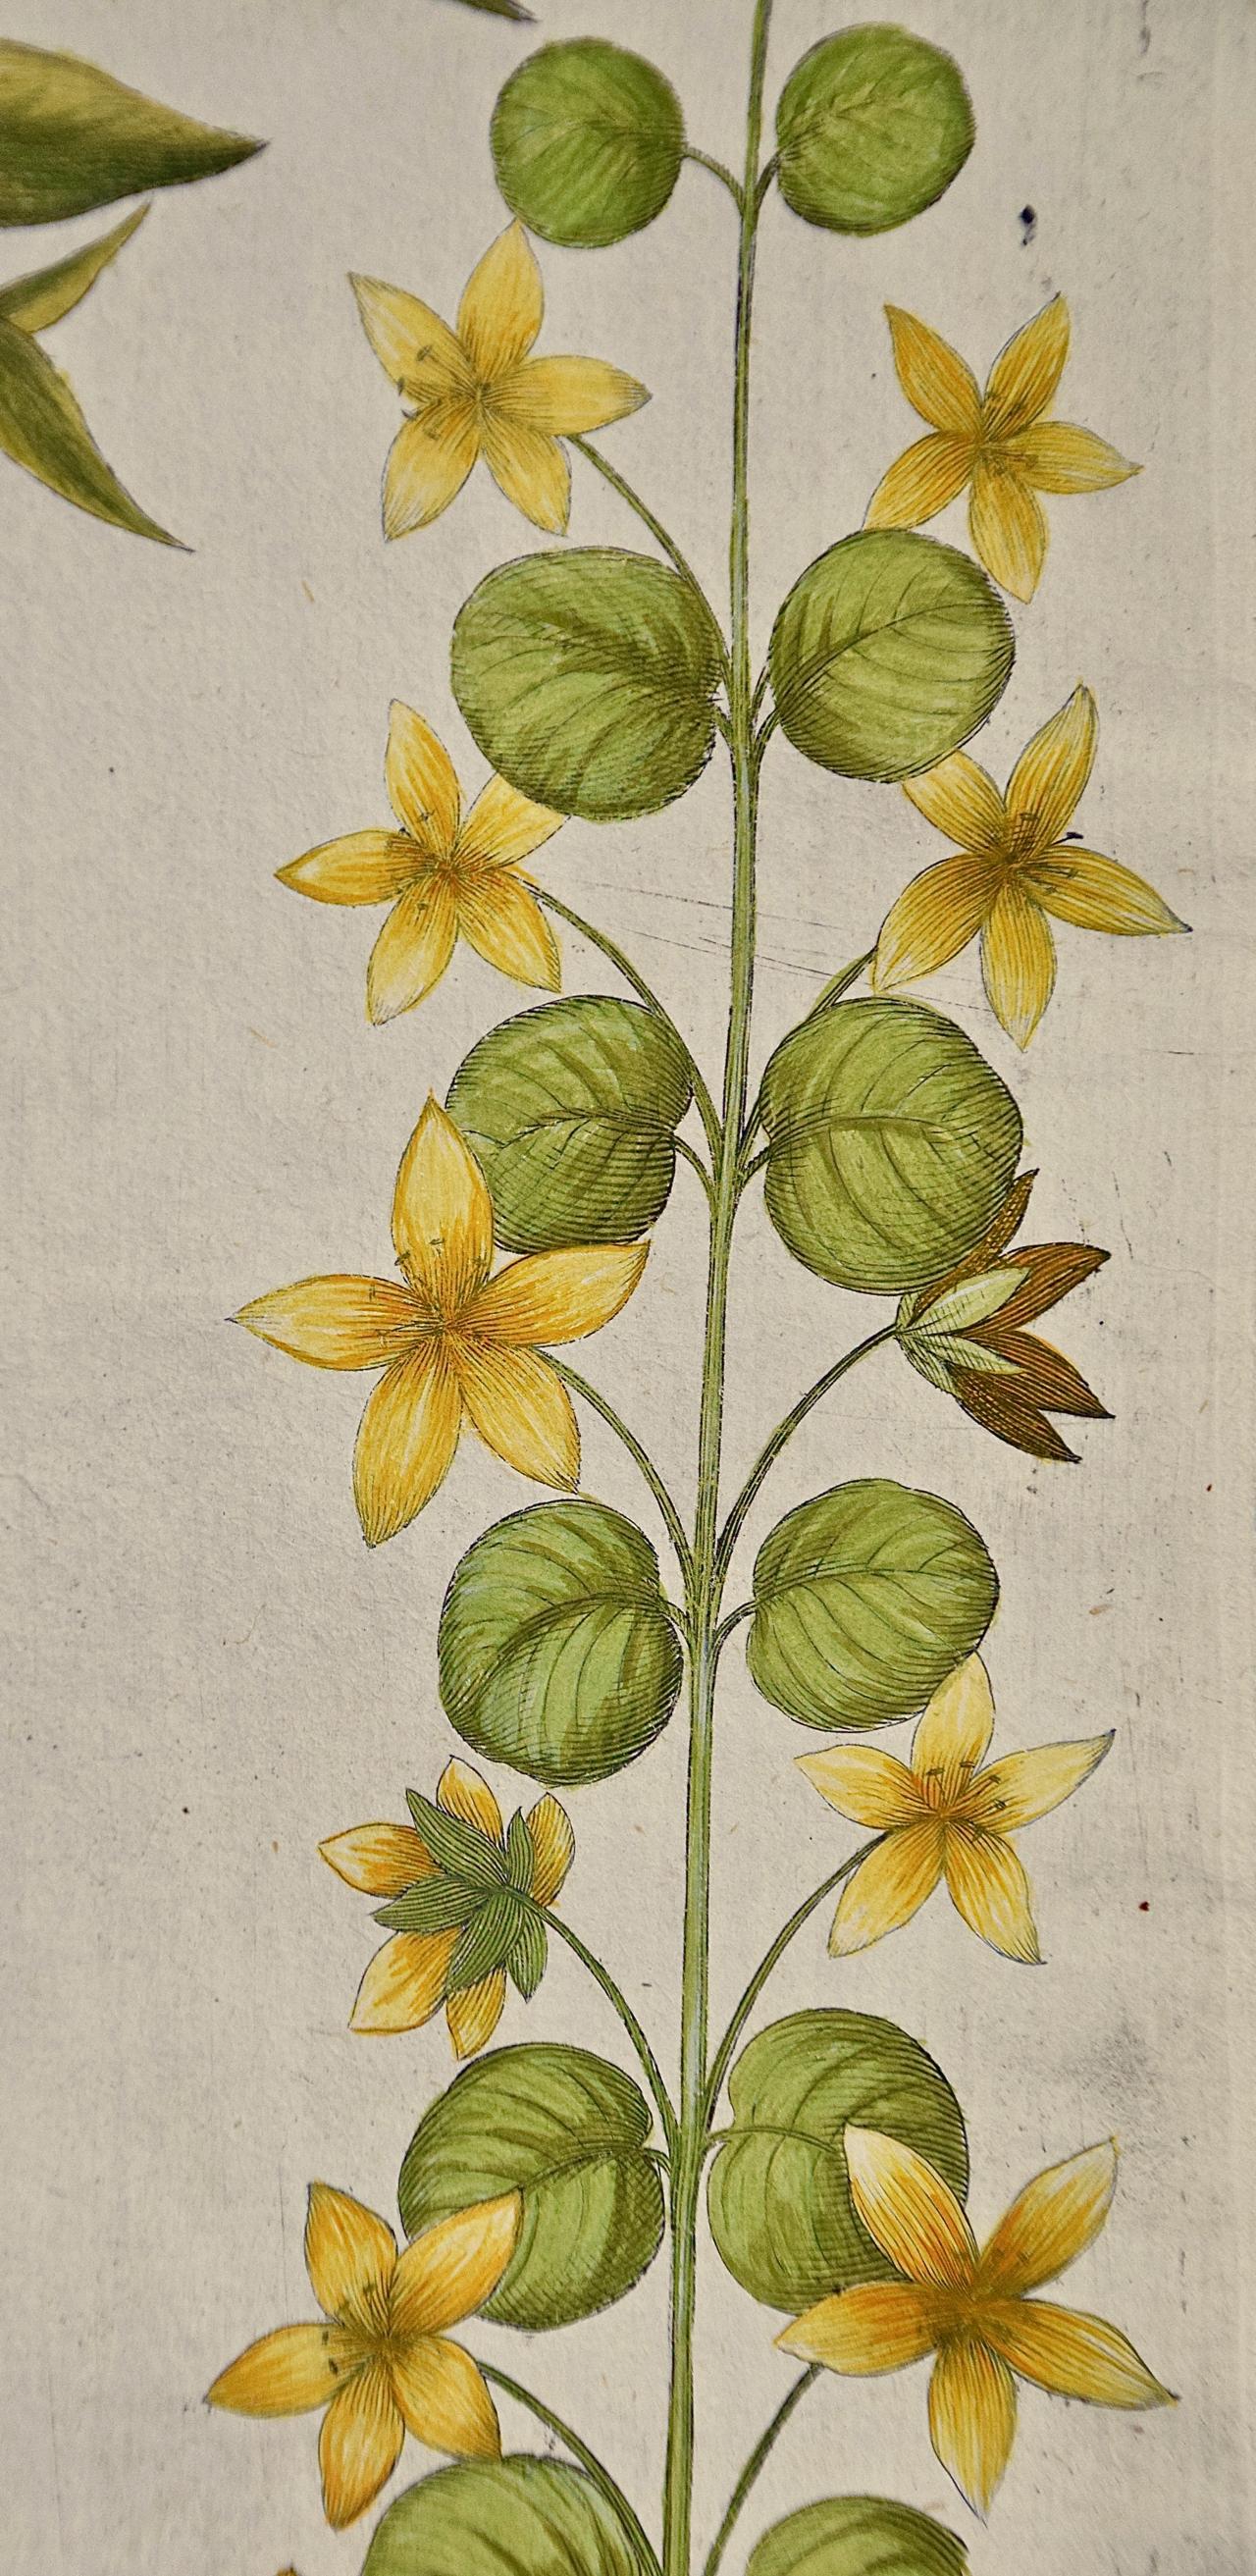 Flowering Lily Plants: A 17th C. Besler Hand-colored Botanical Engraving - Beige Figurative Print by Basilius Besler